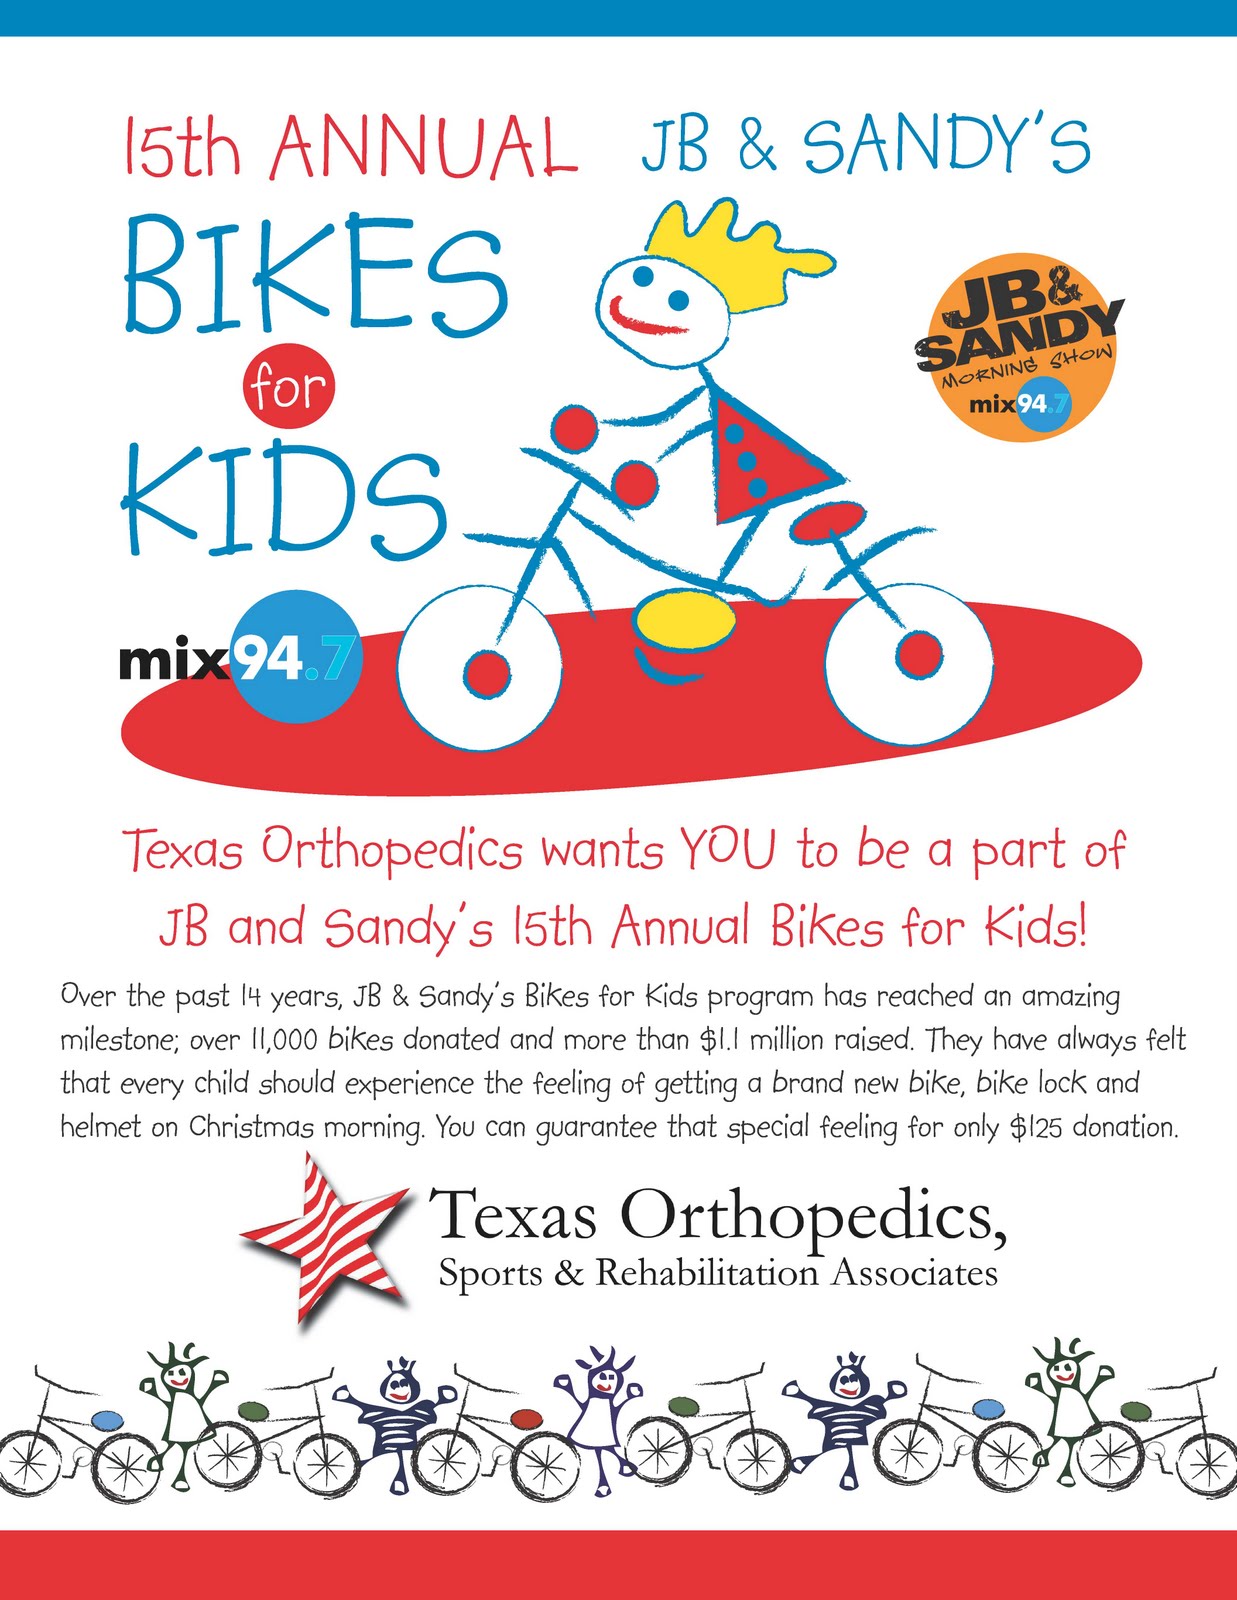 Texas Orthopedics: Texas Orthopedics partners with Bikes for Kids